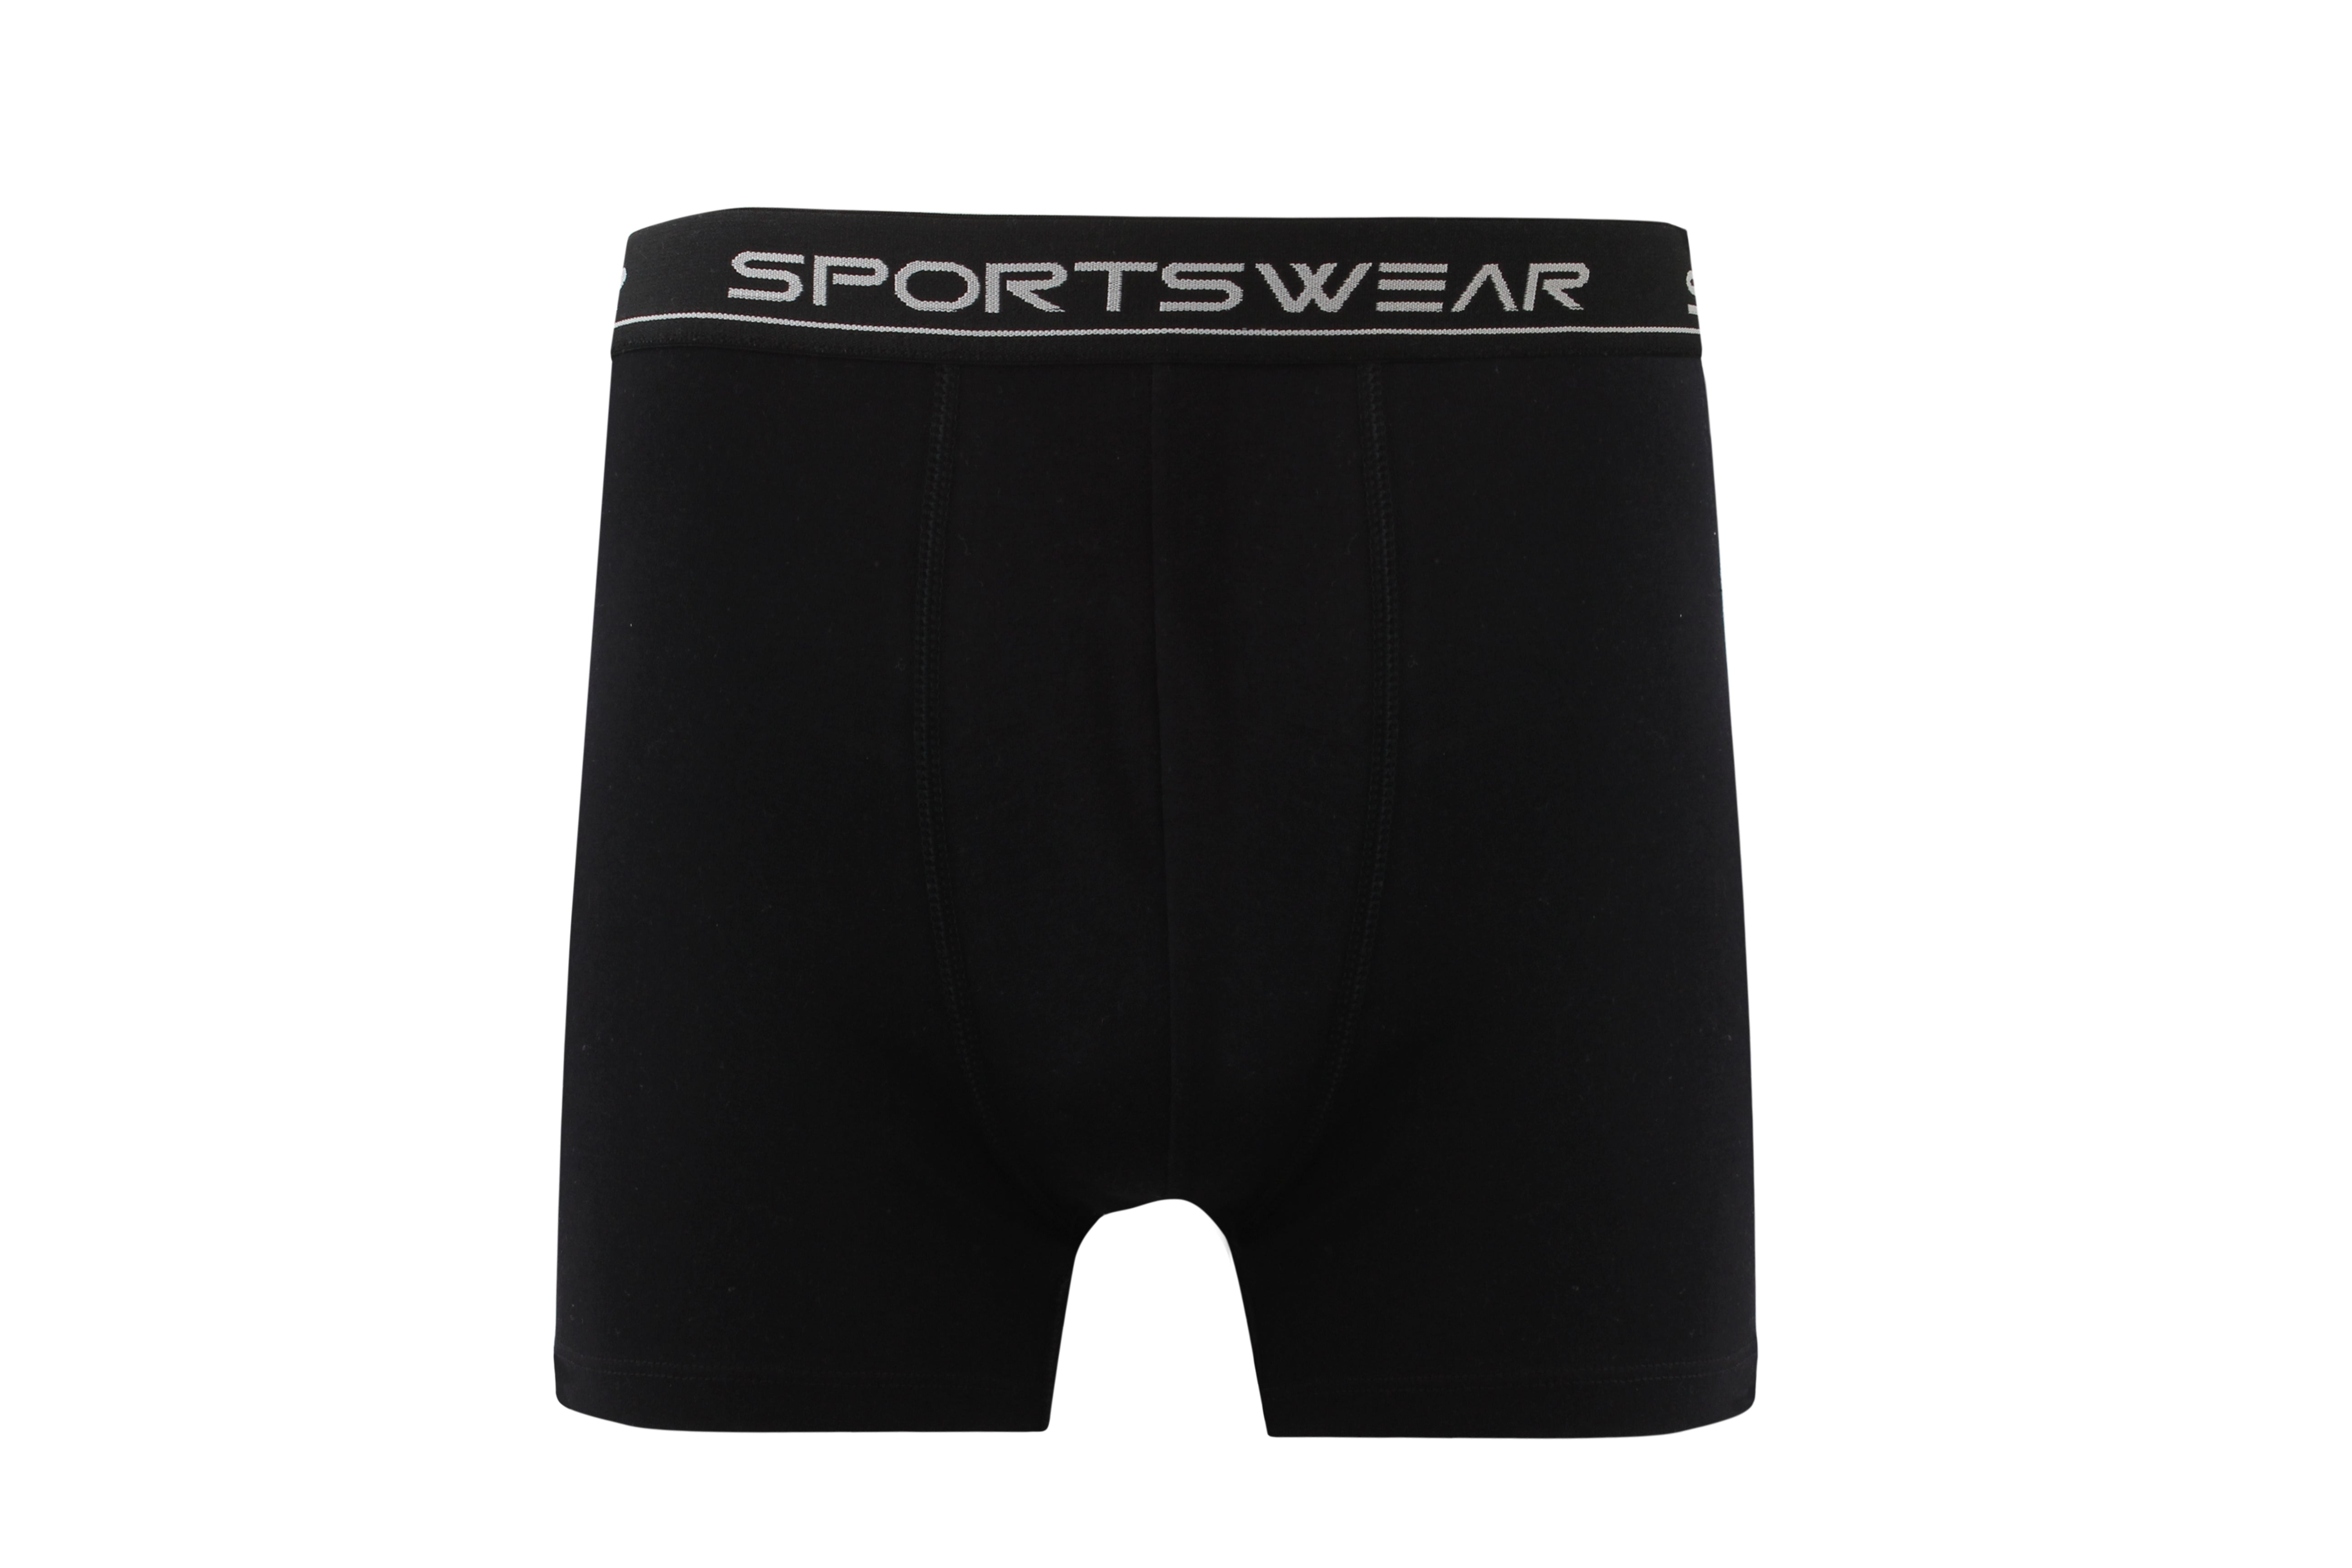 Men's Sportswear Boxer Briefs